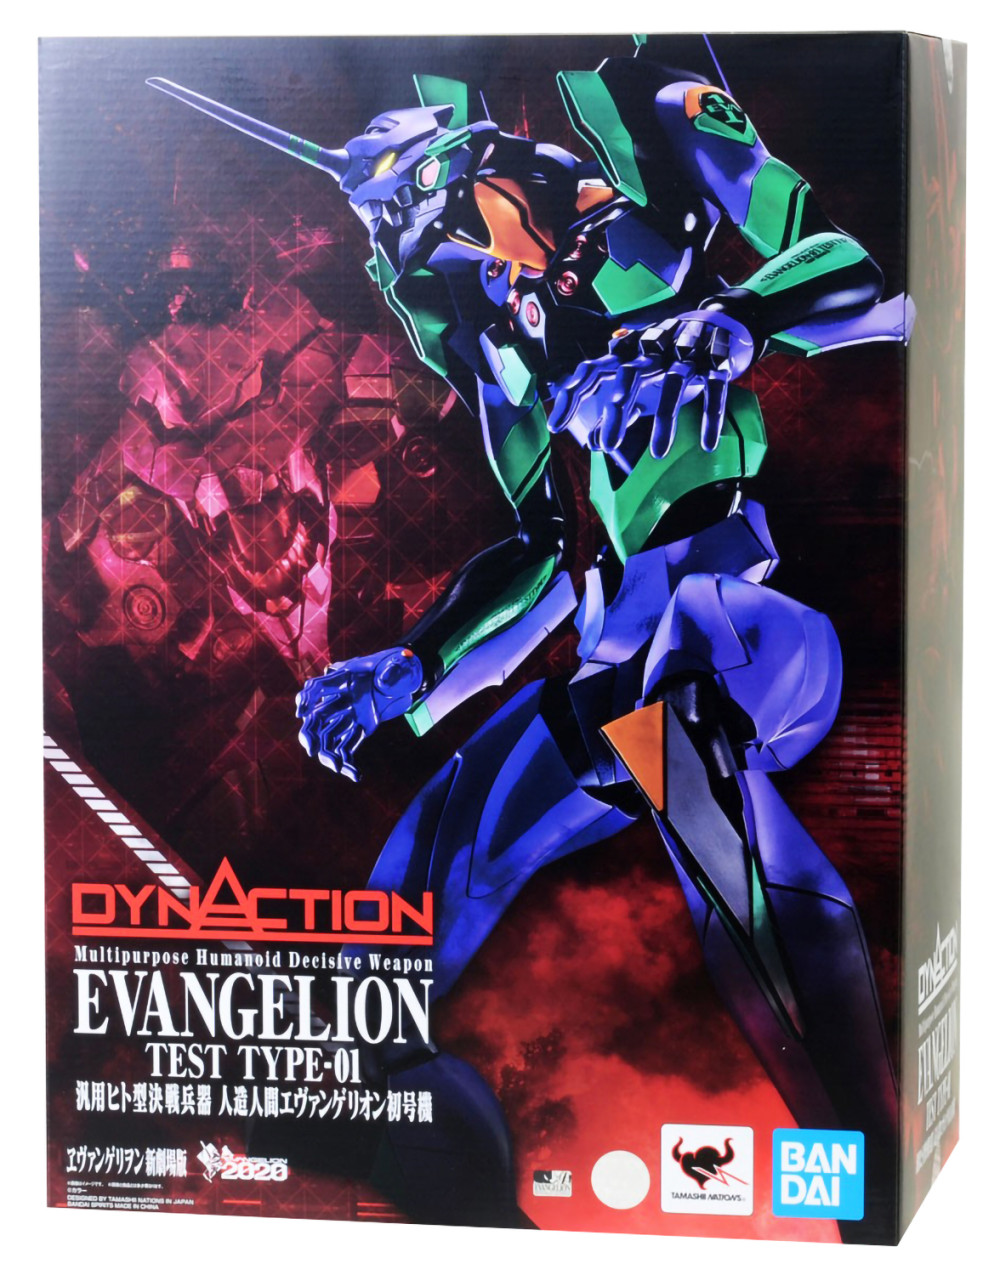  Rebuild Of Evangelion: Multipurpose Humanoid Decisive Weapon Evangelion Test Type-01 Dynaction (40 )